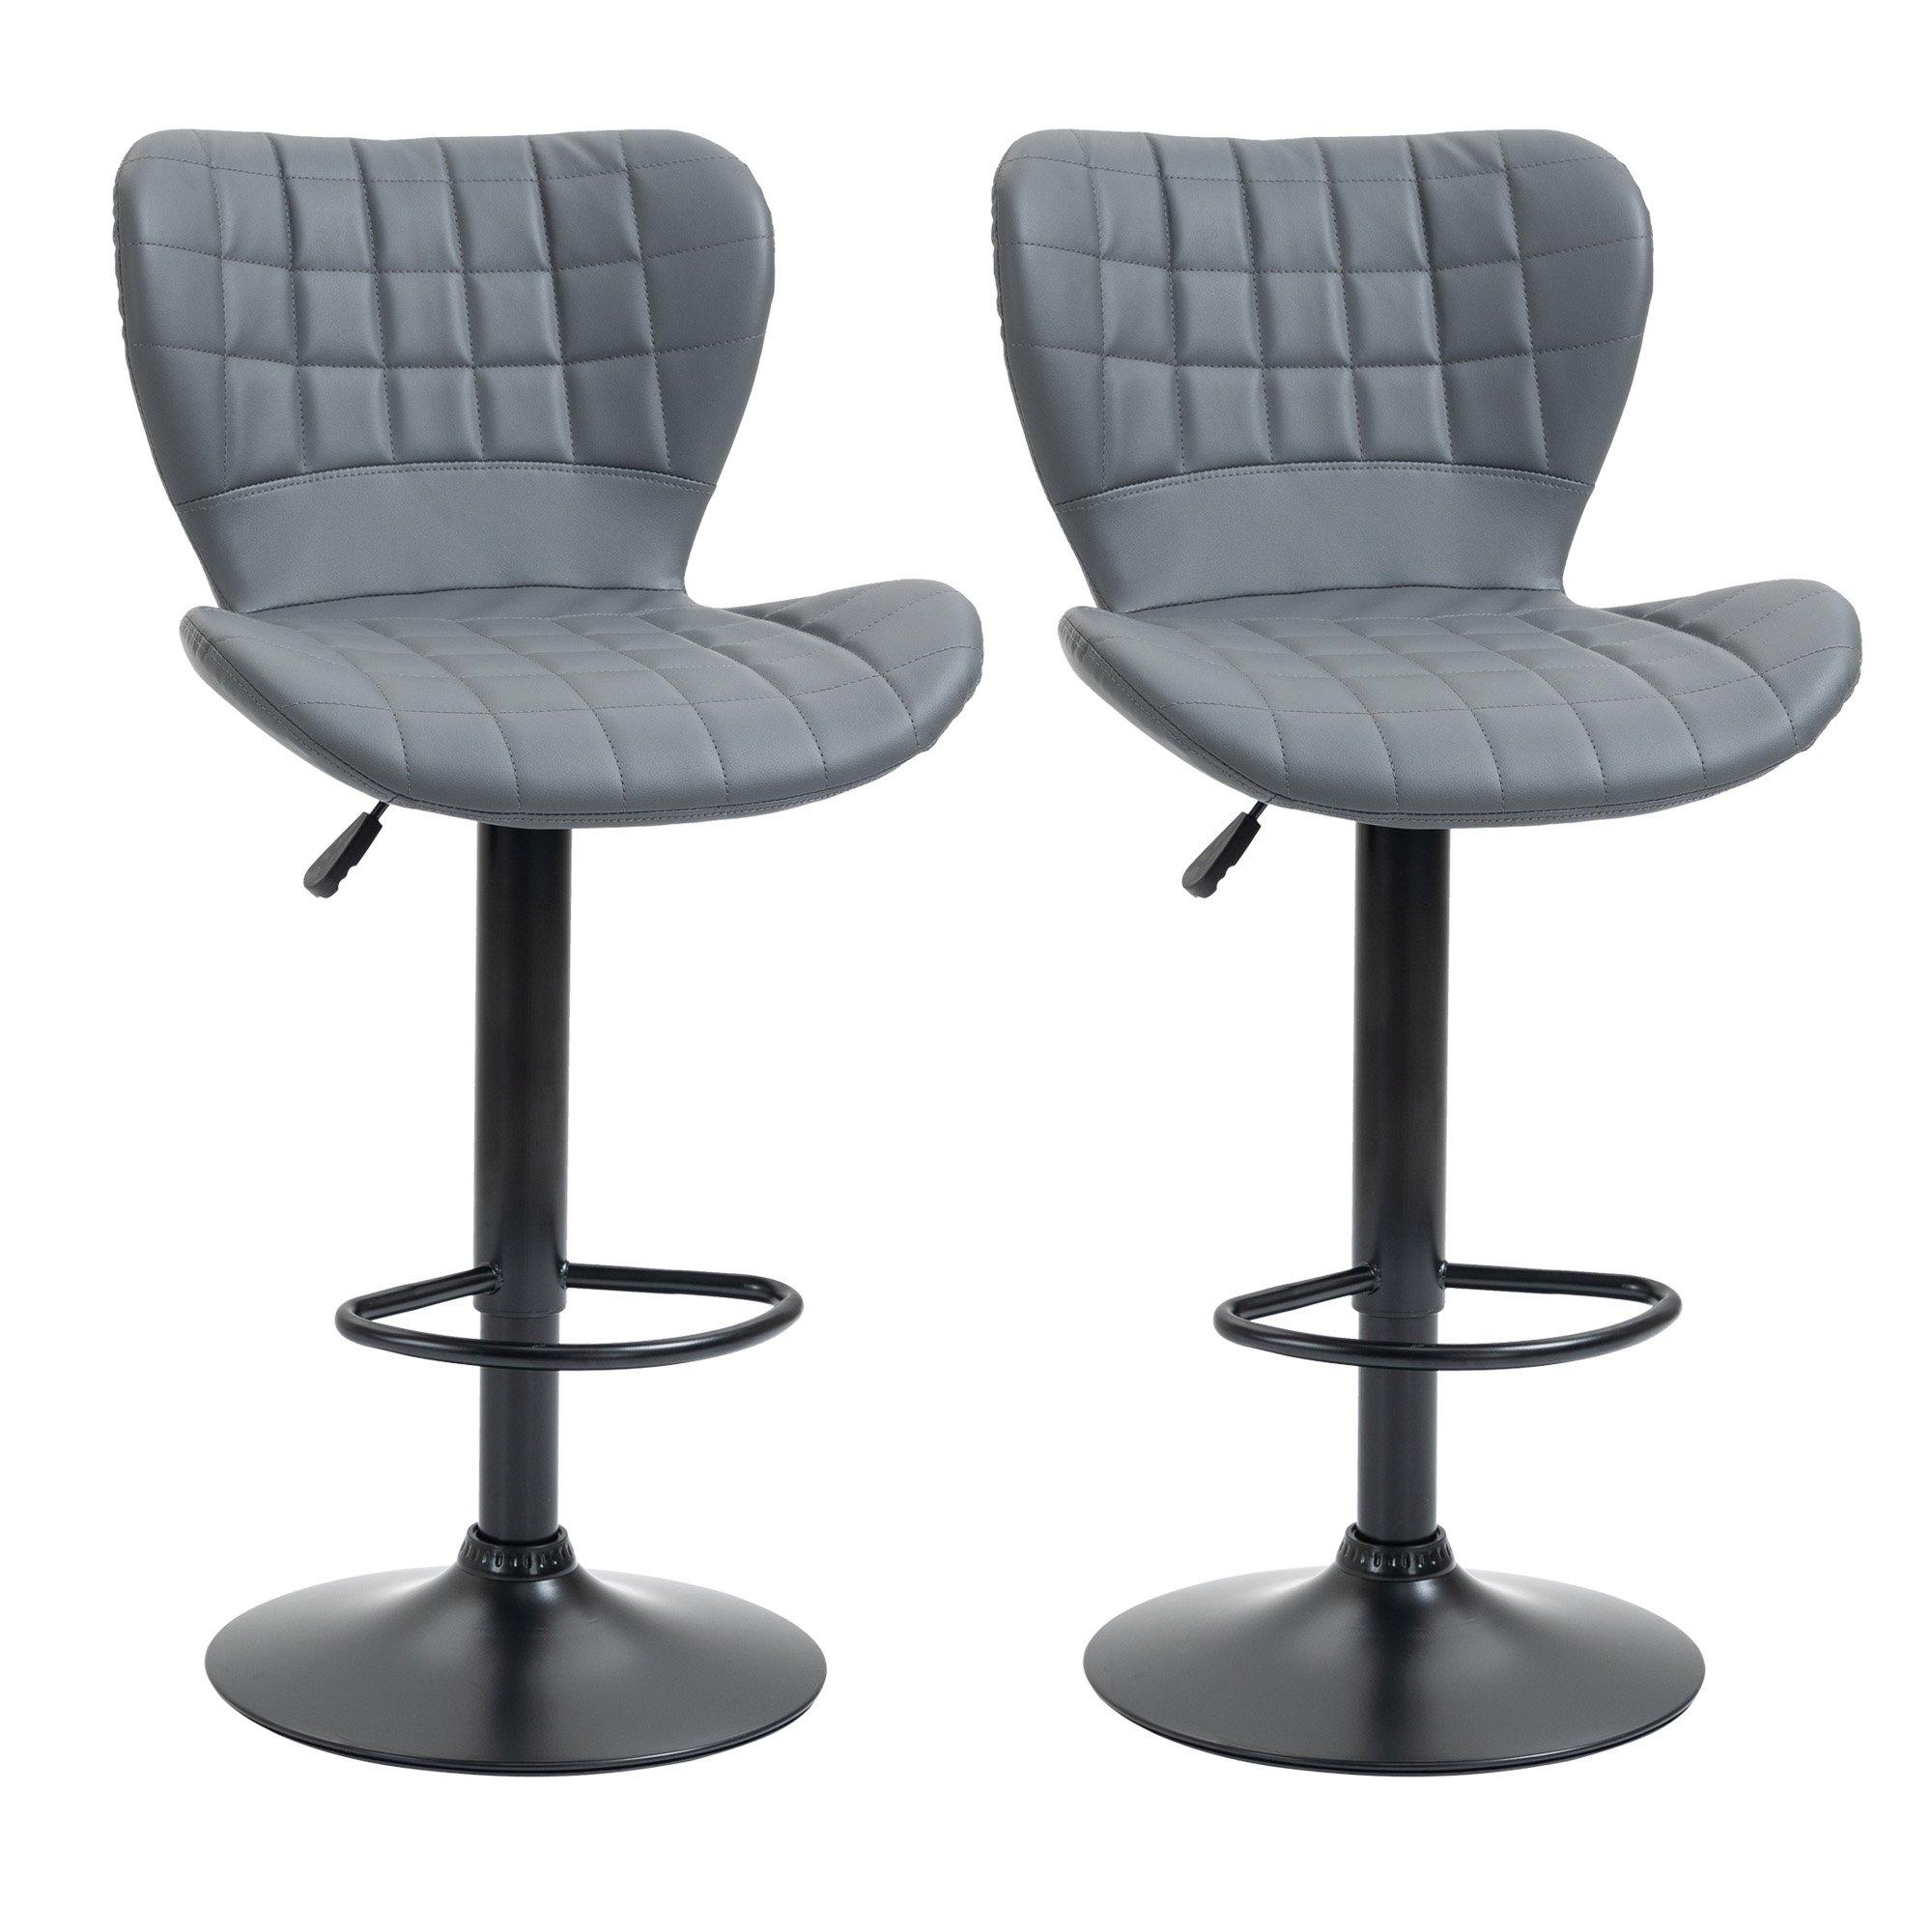 Bar Stools Set of 2 Adjustable Height Swivel Bar Chairs